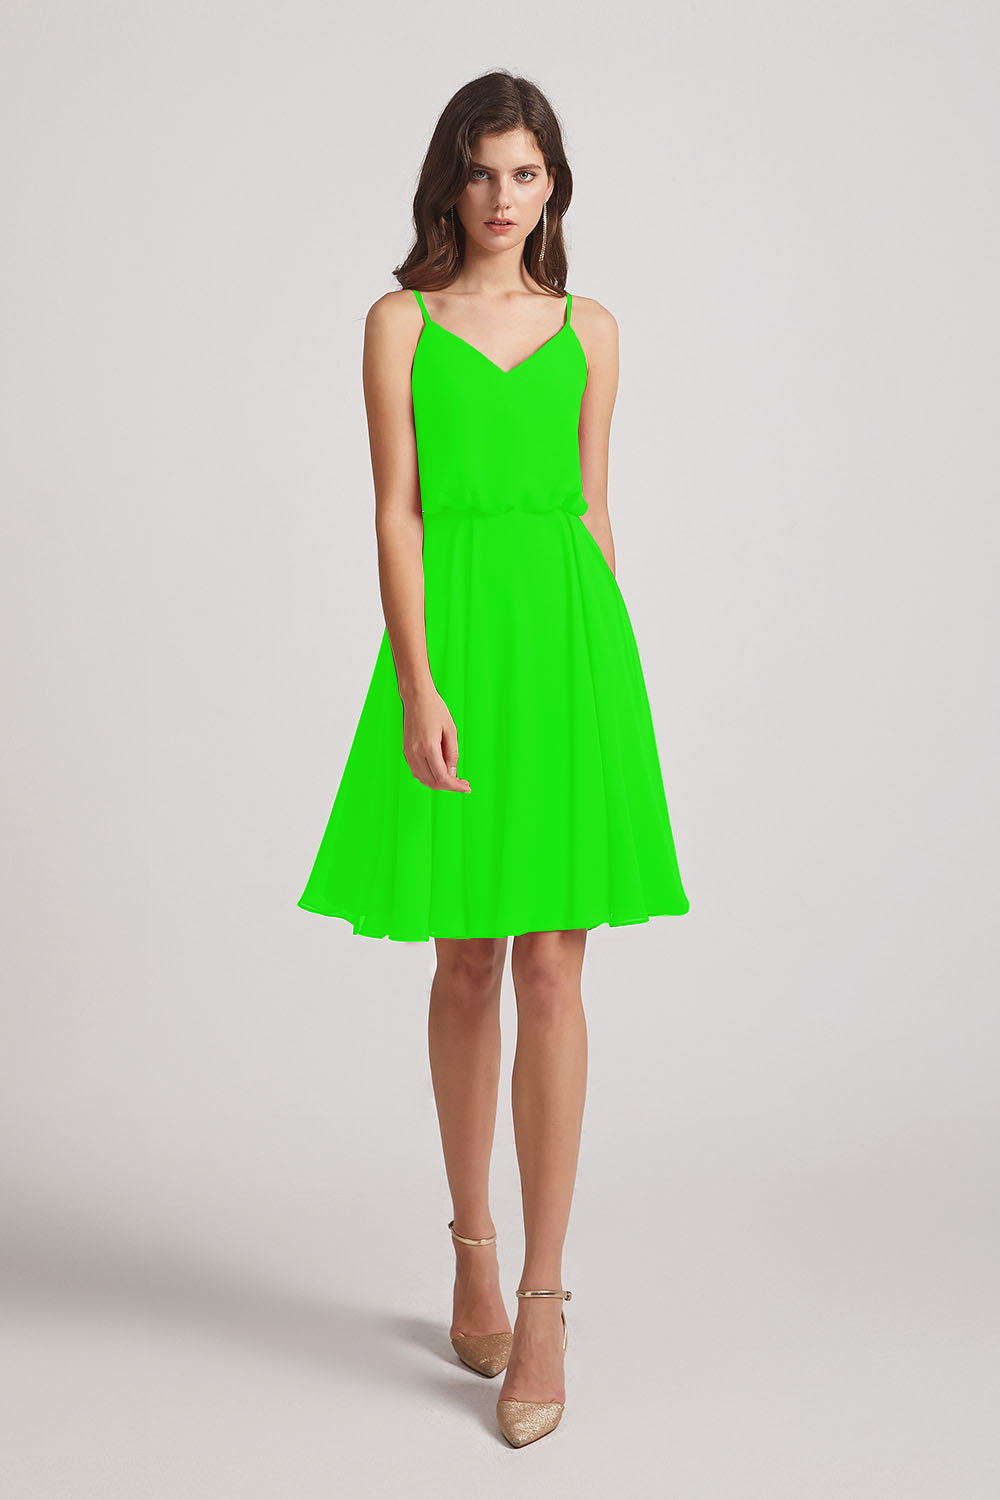 Alfa Bridal Lime Green Spaghetti Straps Short V-Neck Chiffon Party Dresses (AF0076)